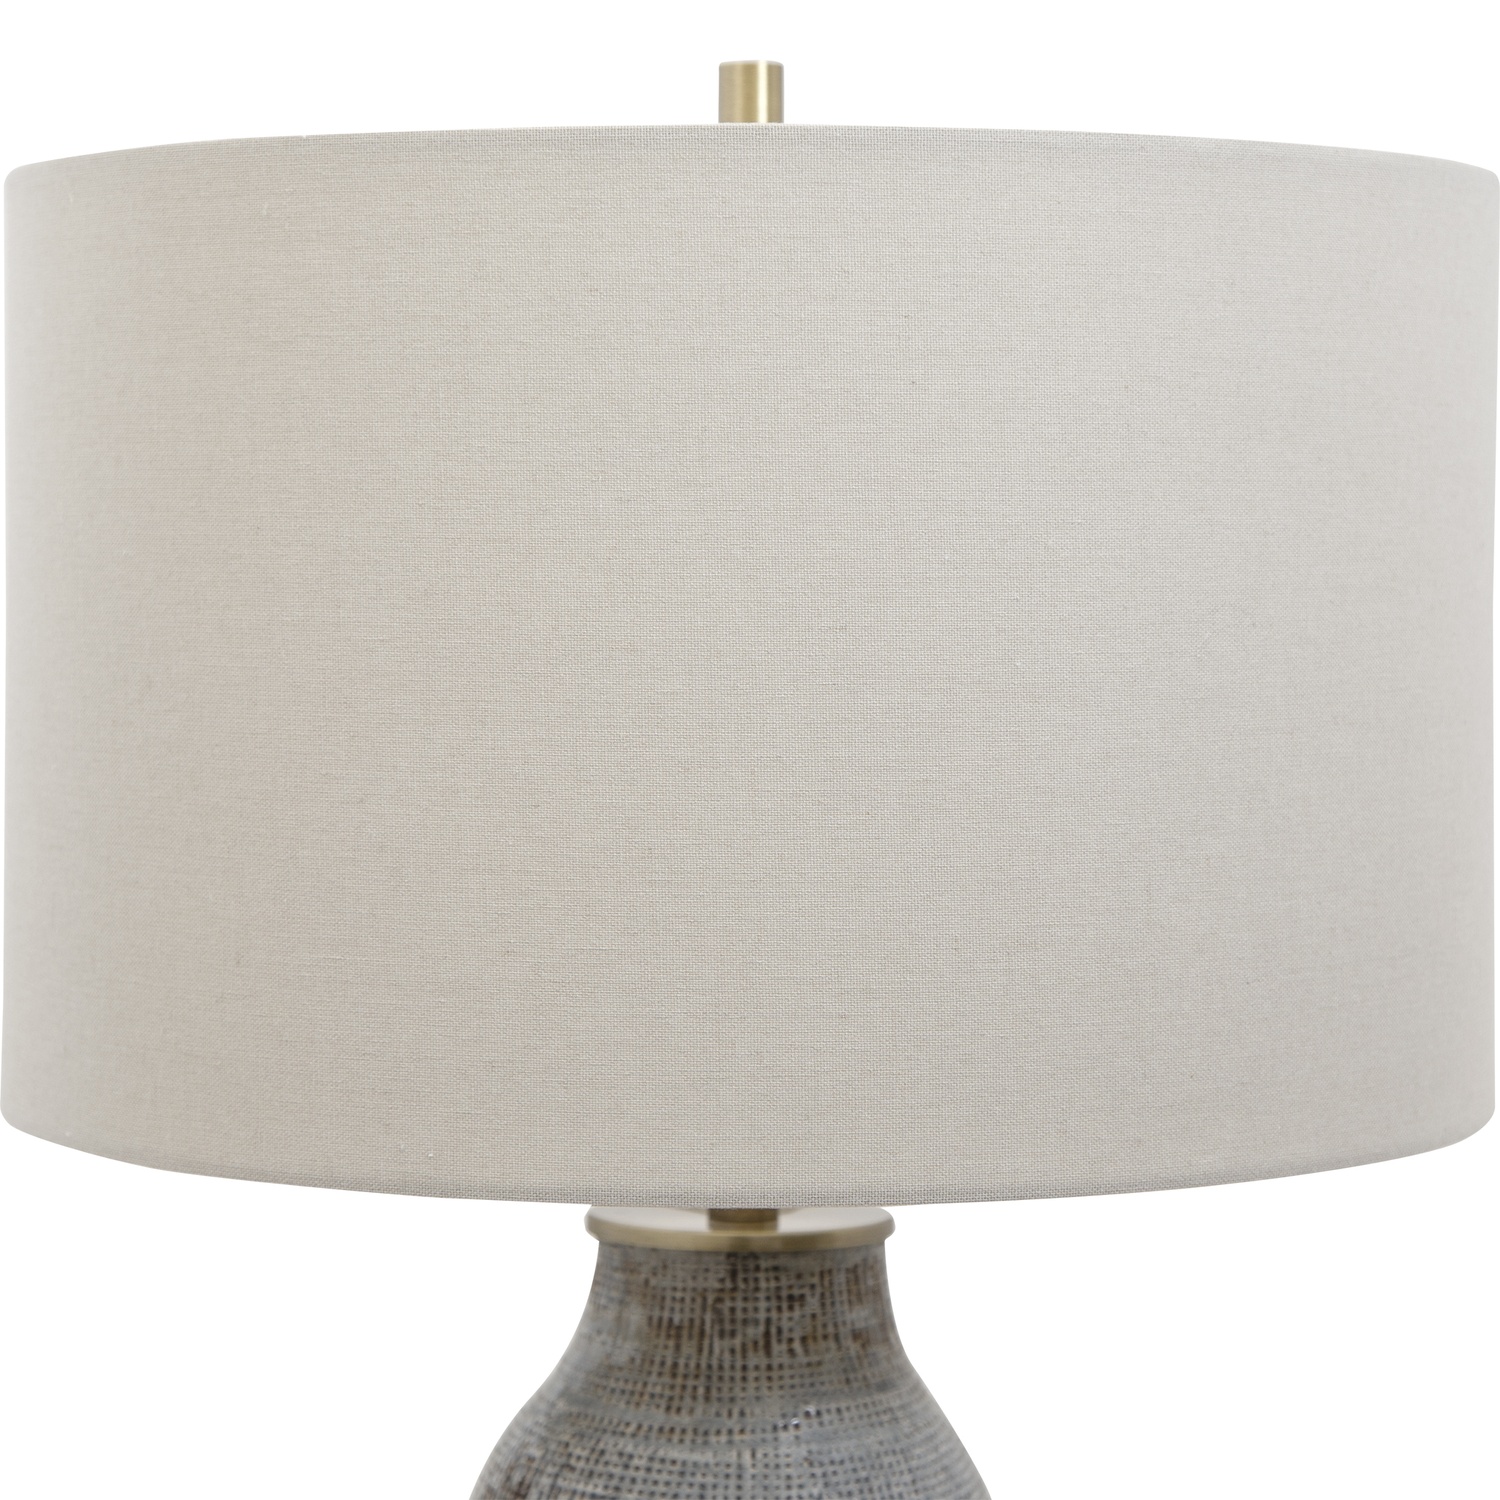 Monacan-Gray Textured Table Lamp